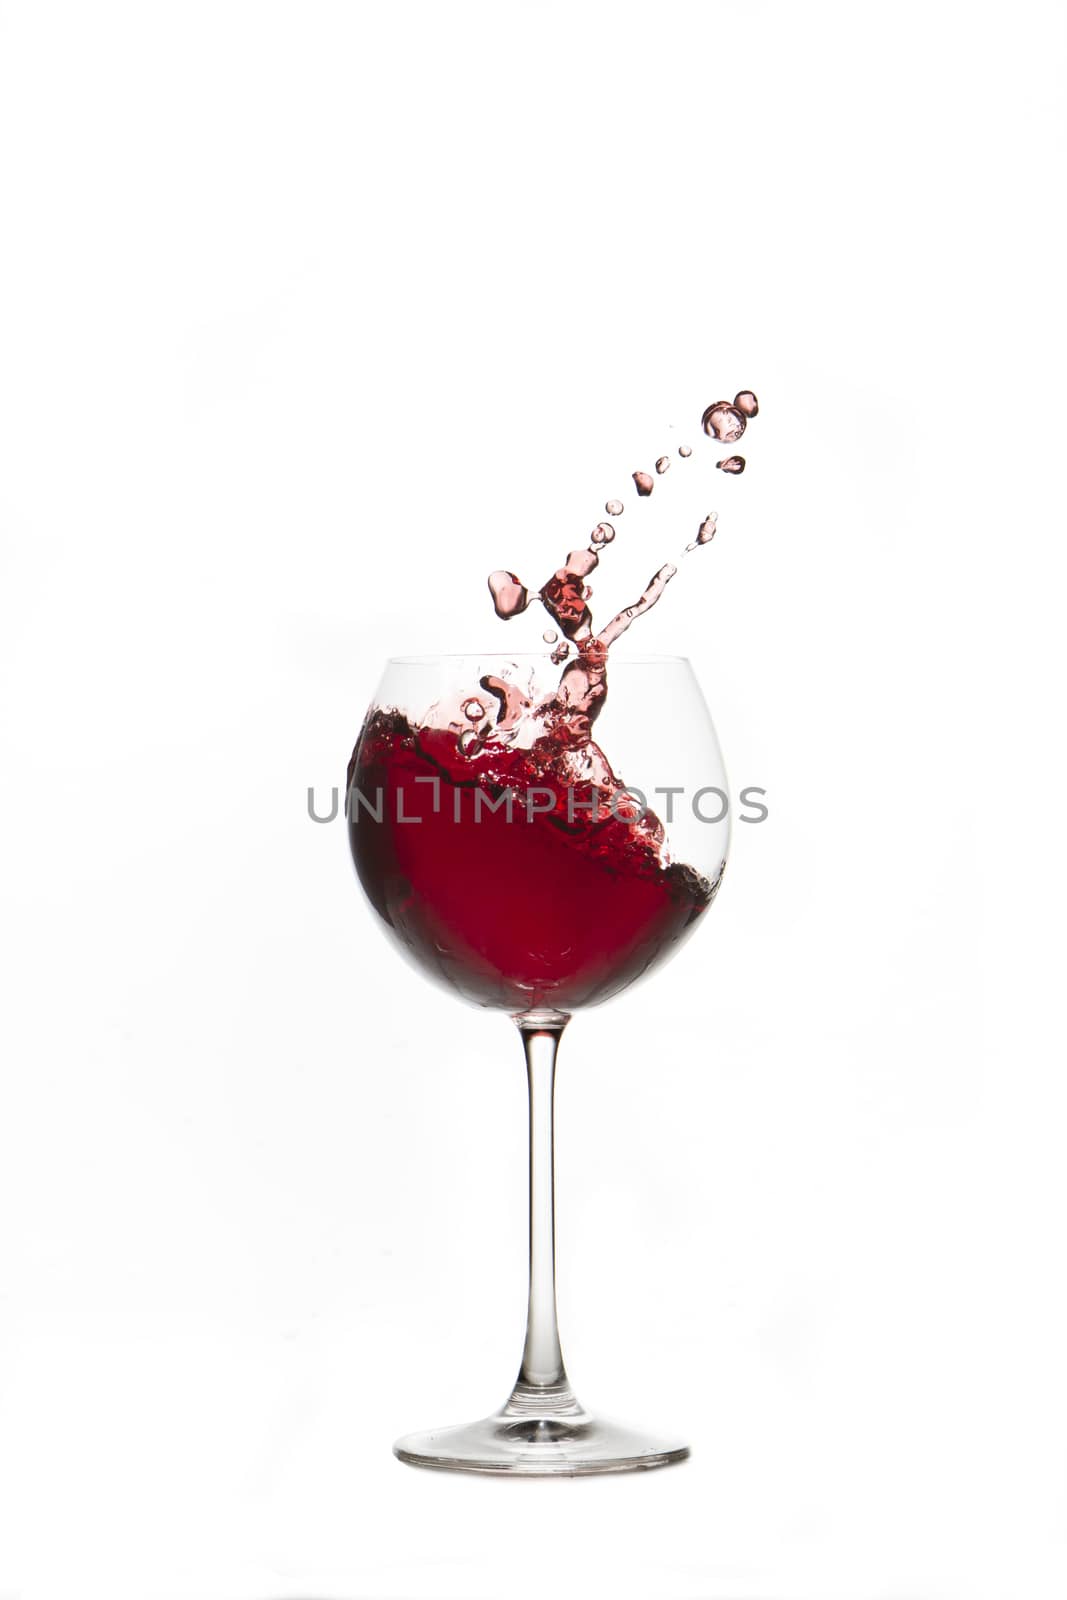 Red wine splash Glass with white background 